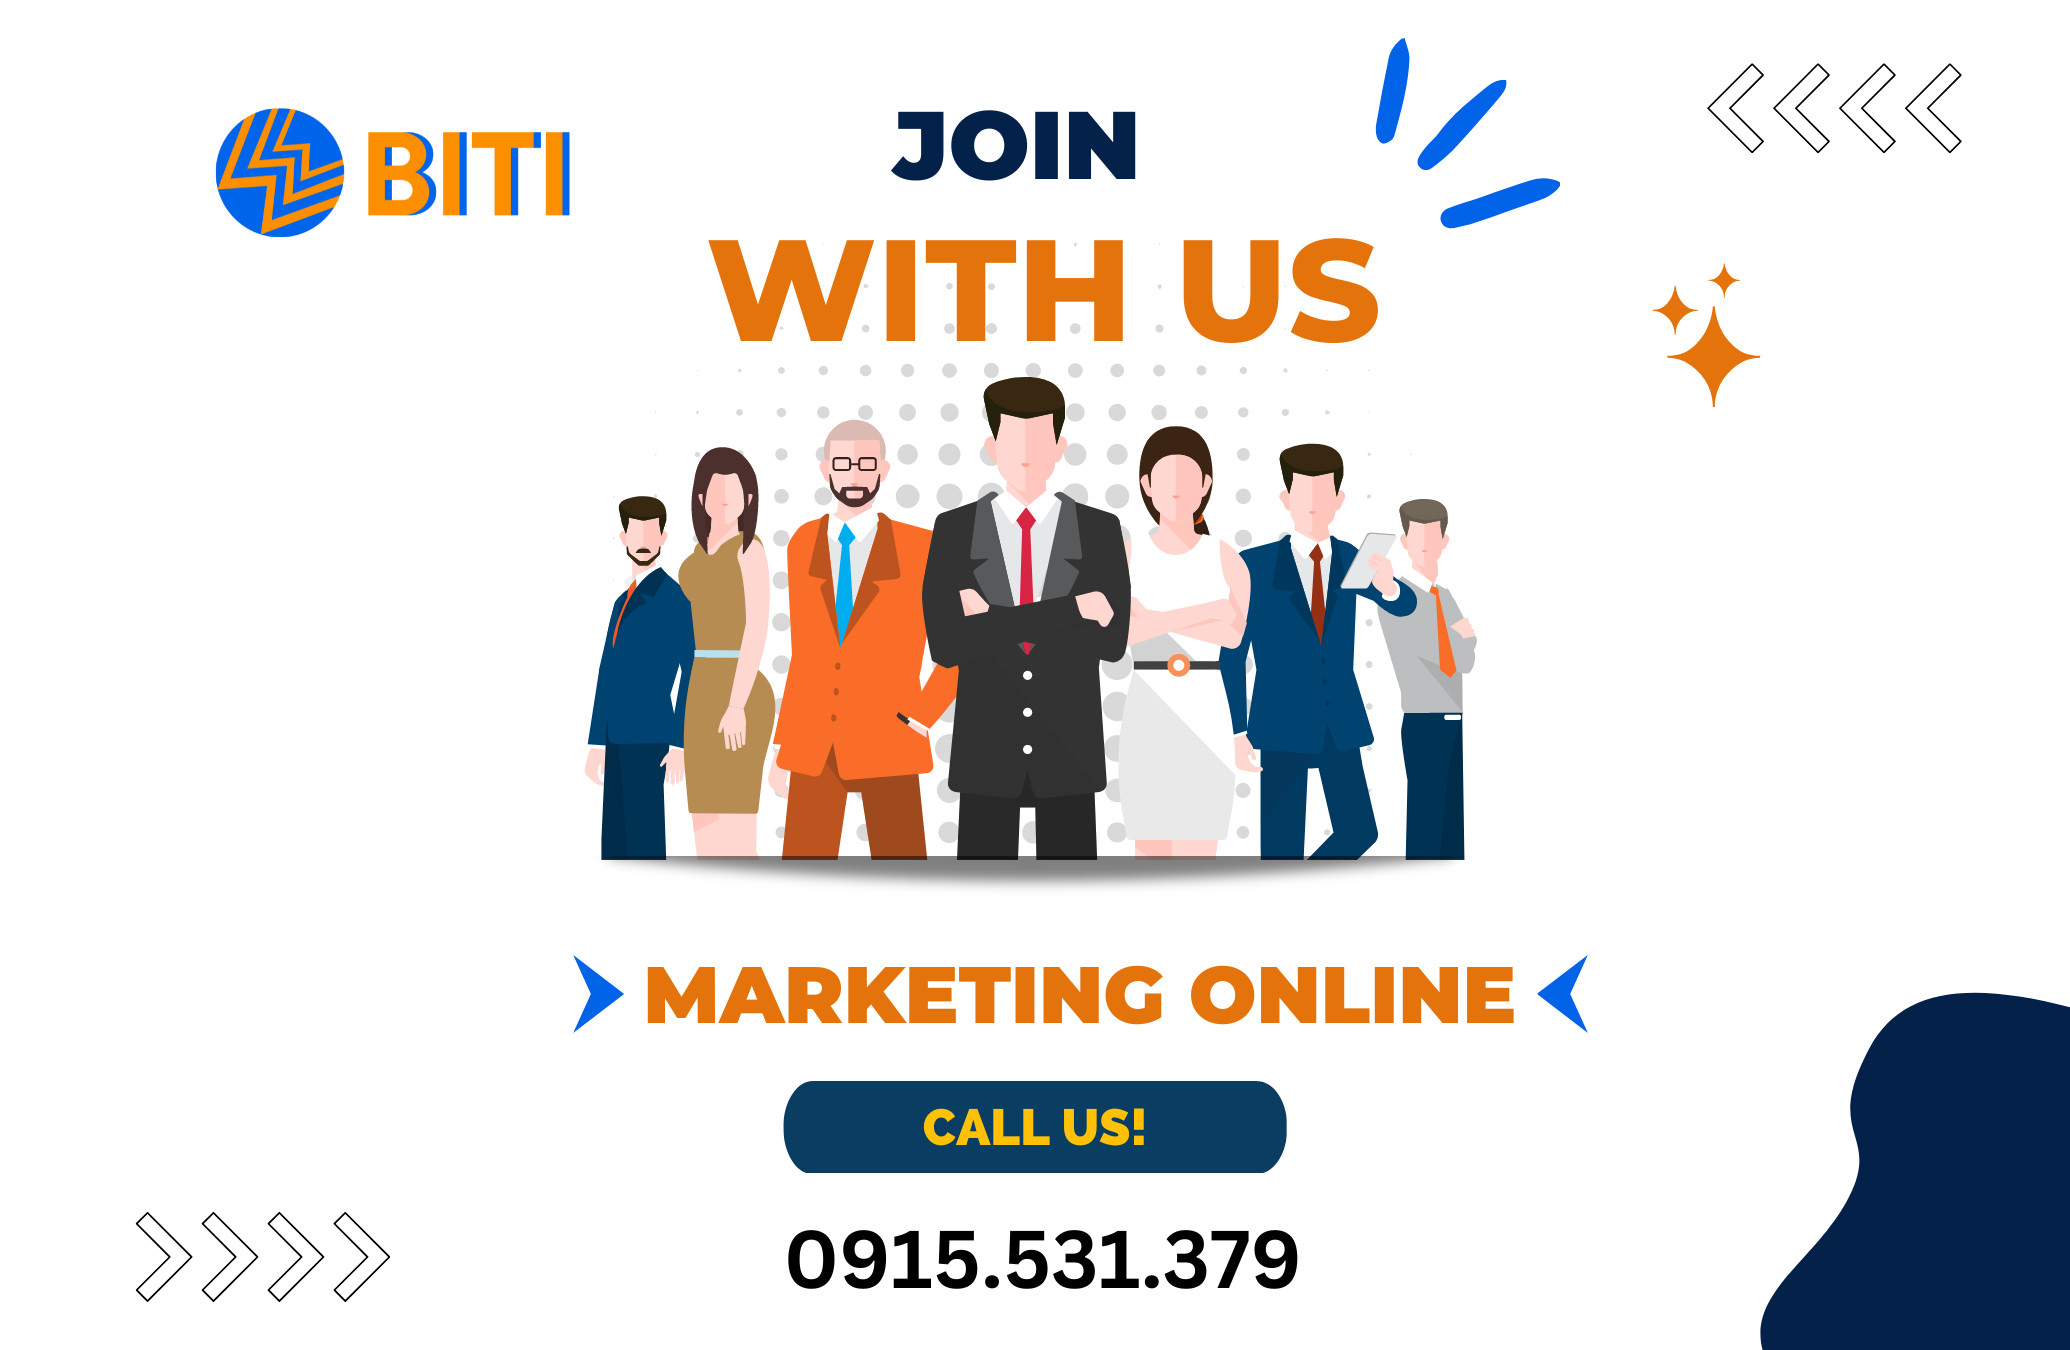 Recruitment for Marketing Online Position